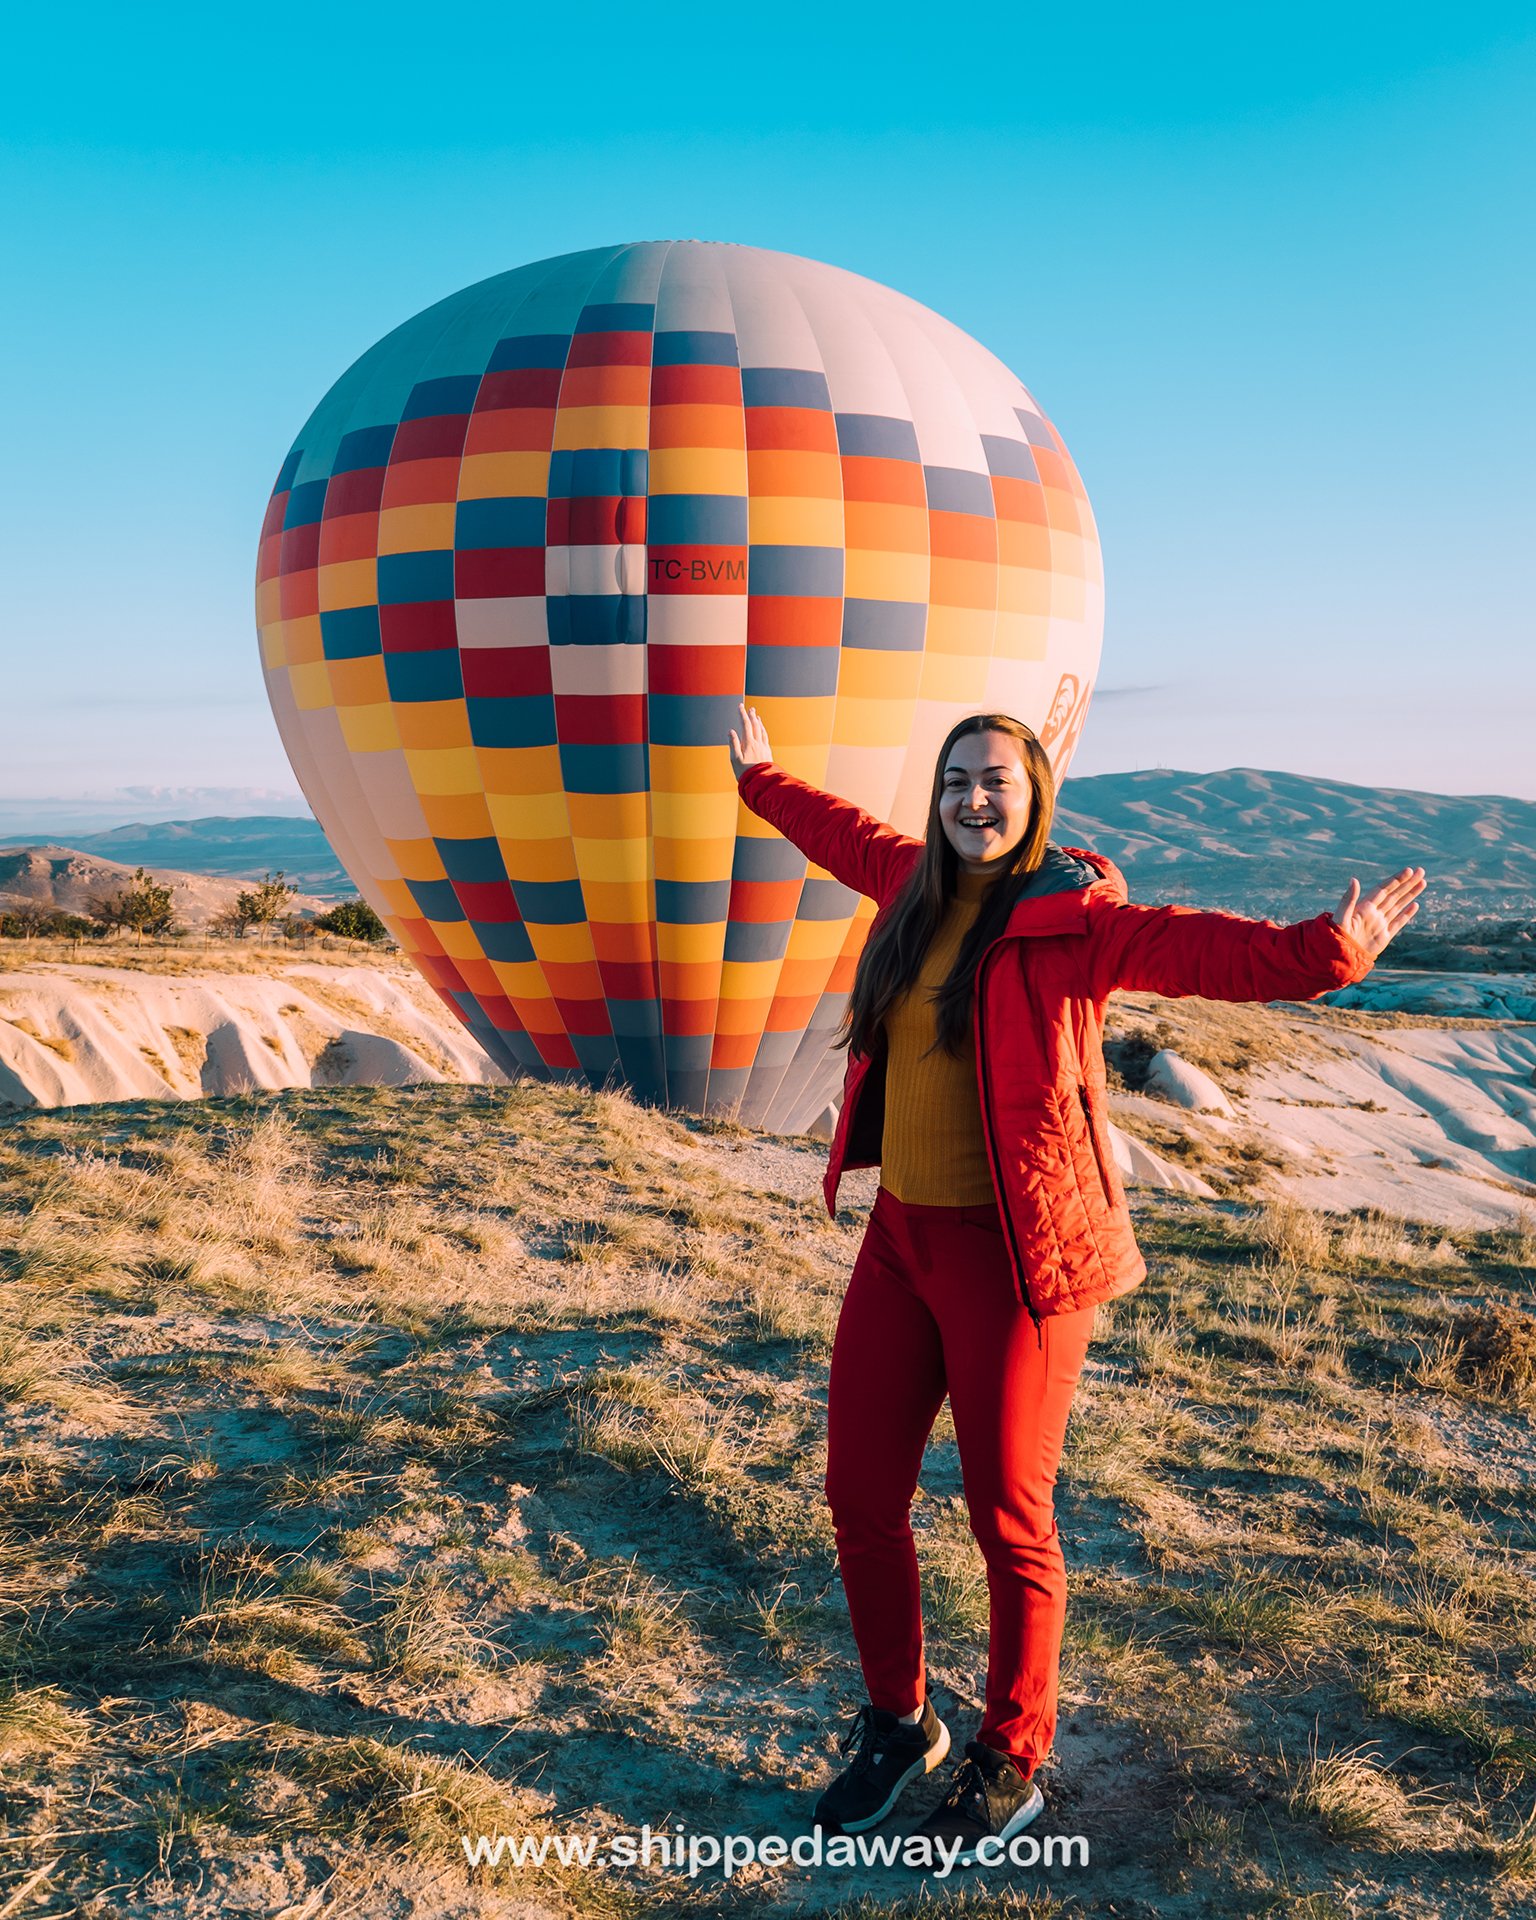 Arijana Tkalčec with a hot air balloon in Cappadocia, Turkey